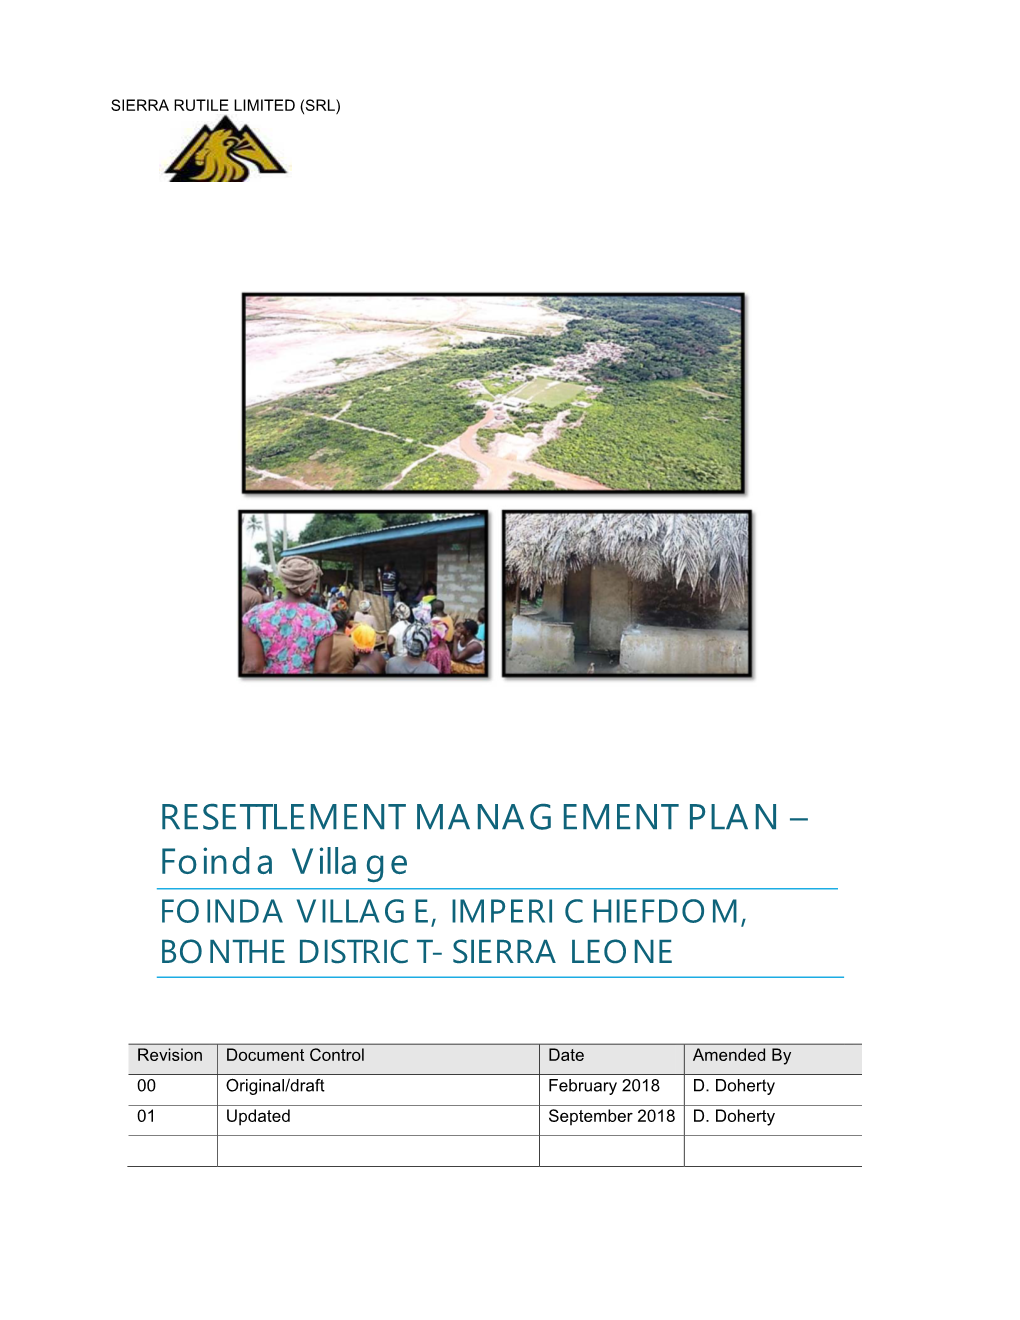 Foinda Resettlement Management Plan